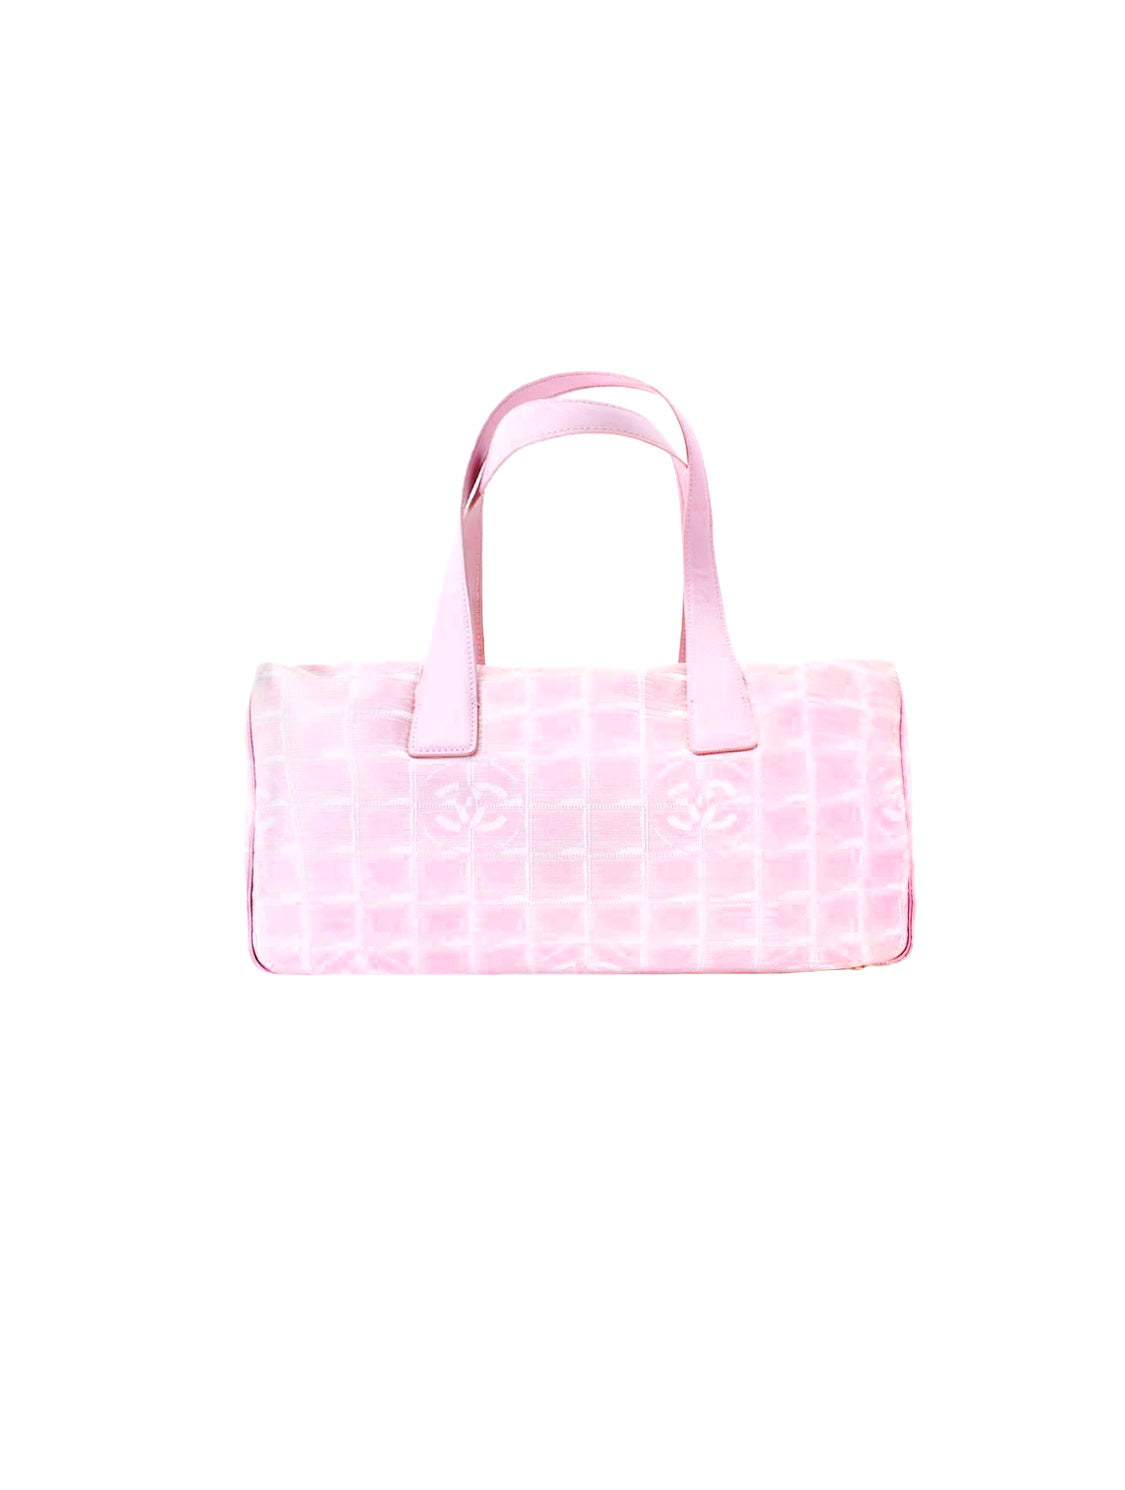 Chanel 2000s Pink Sports Rectangular Handbag